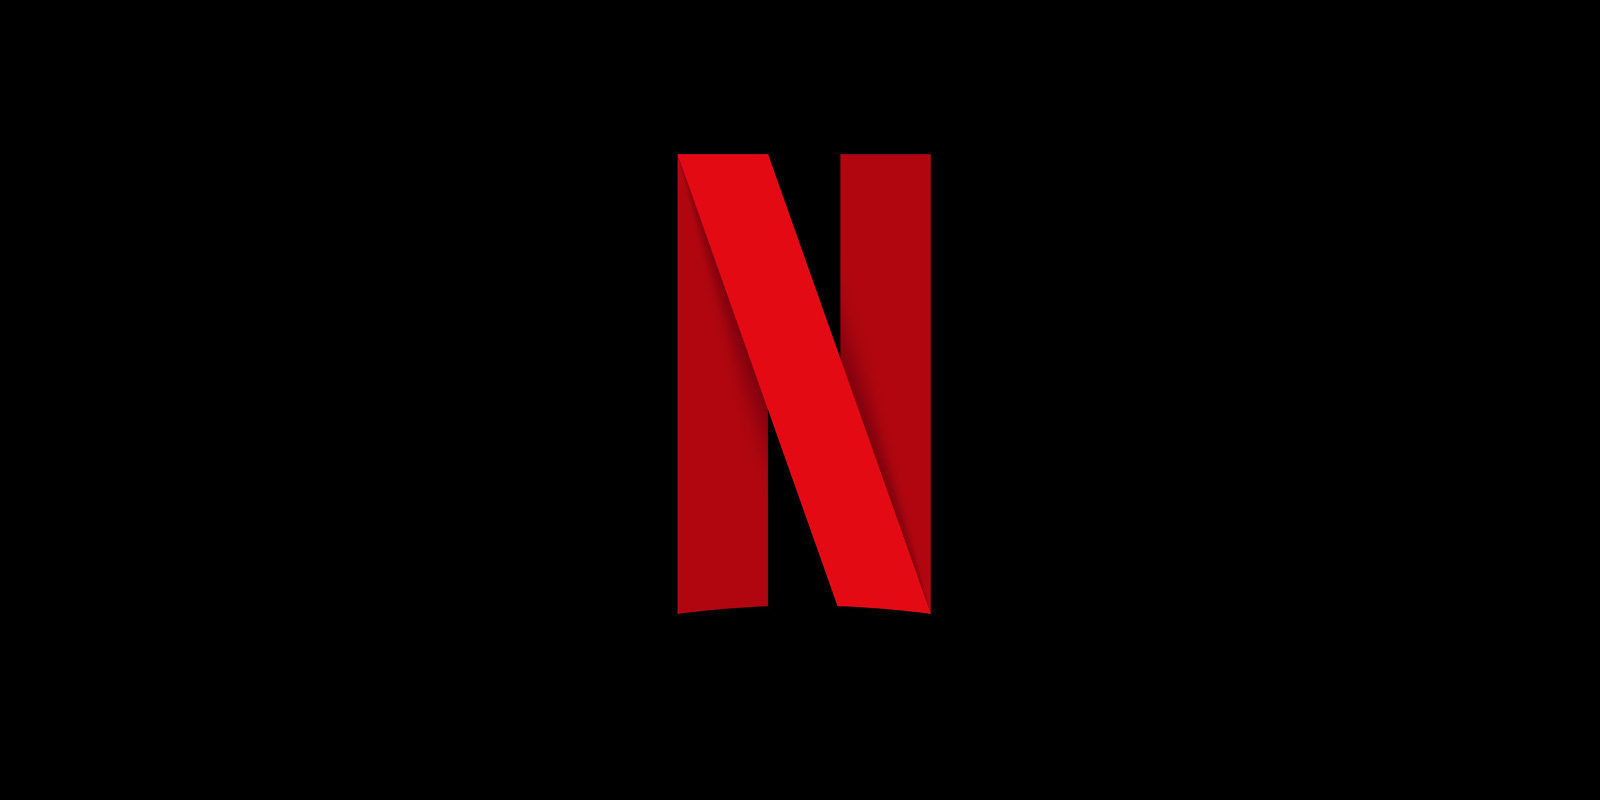 Las películas que llegan a Netflix en el mes de febrero